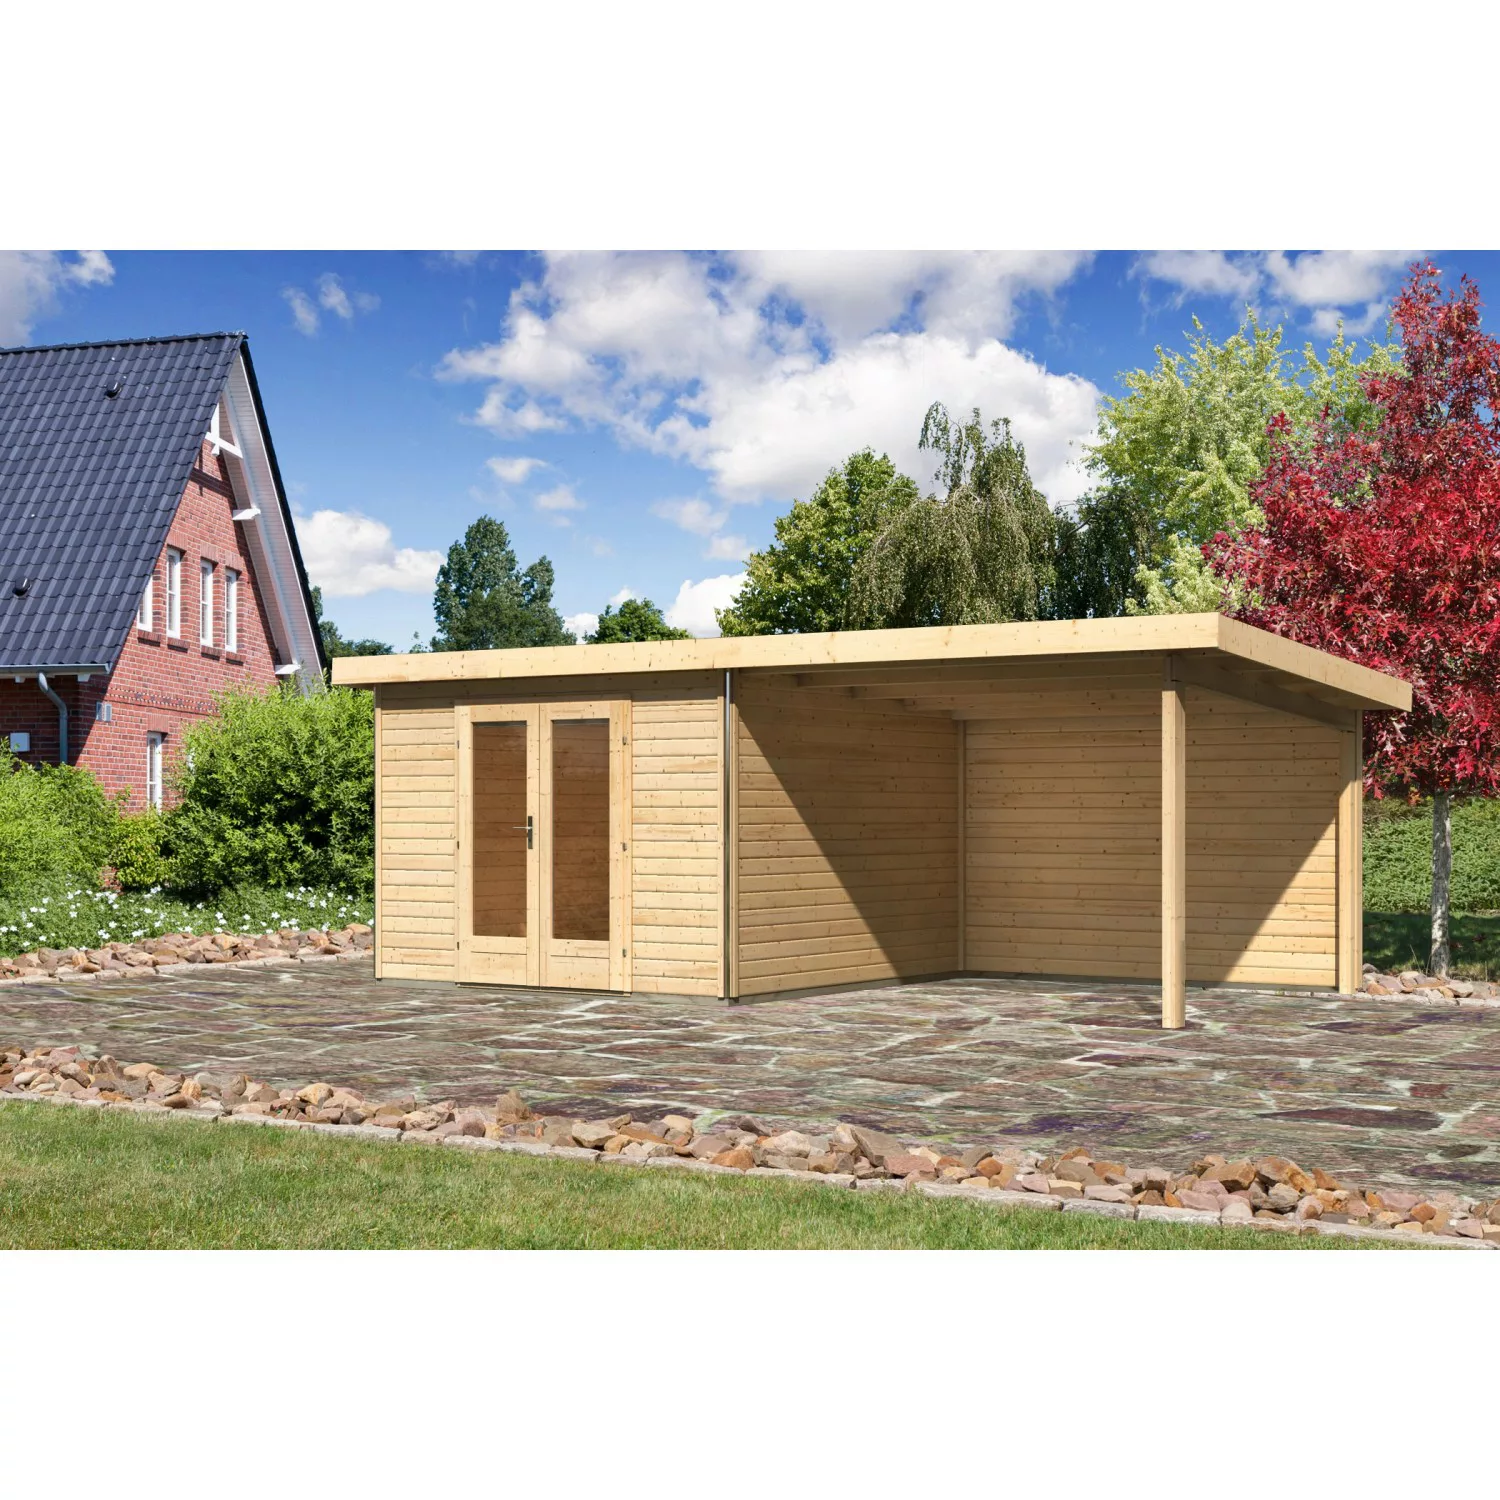 Karibu Holz-Gartenhaus Norrköping Naturbelassen Pultdach 305 cm x 305 cm günstig online kaufen